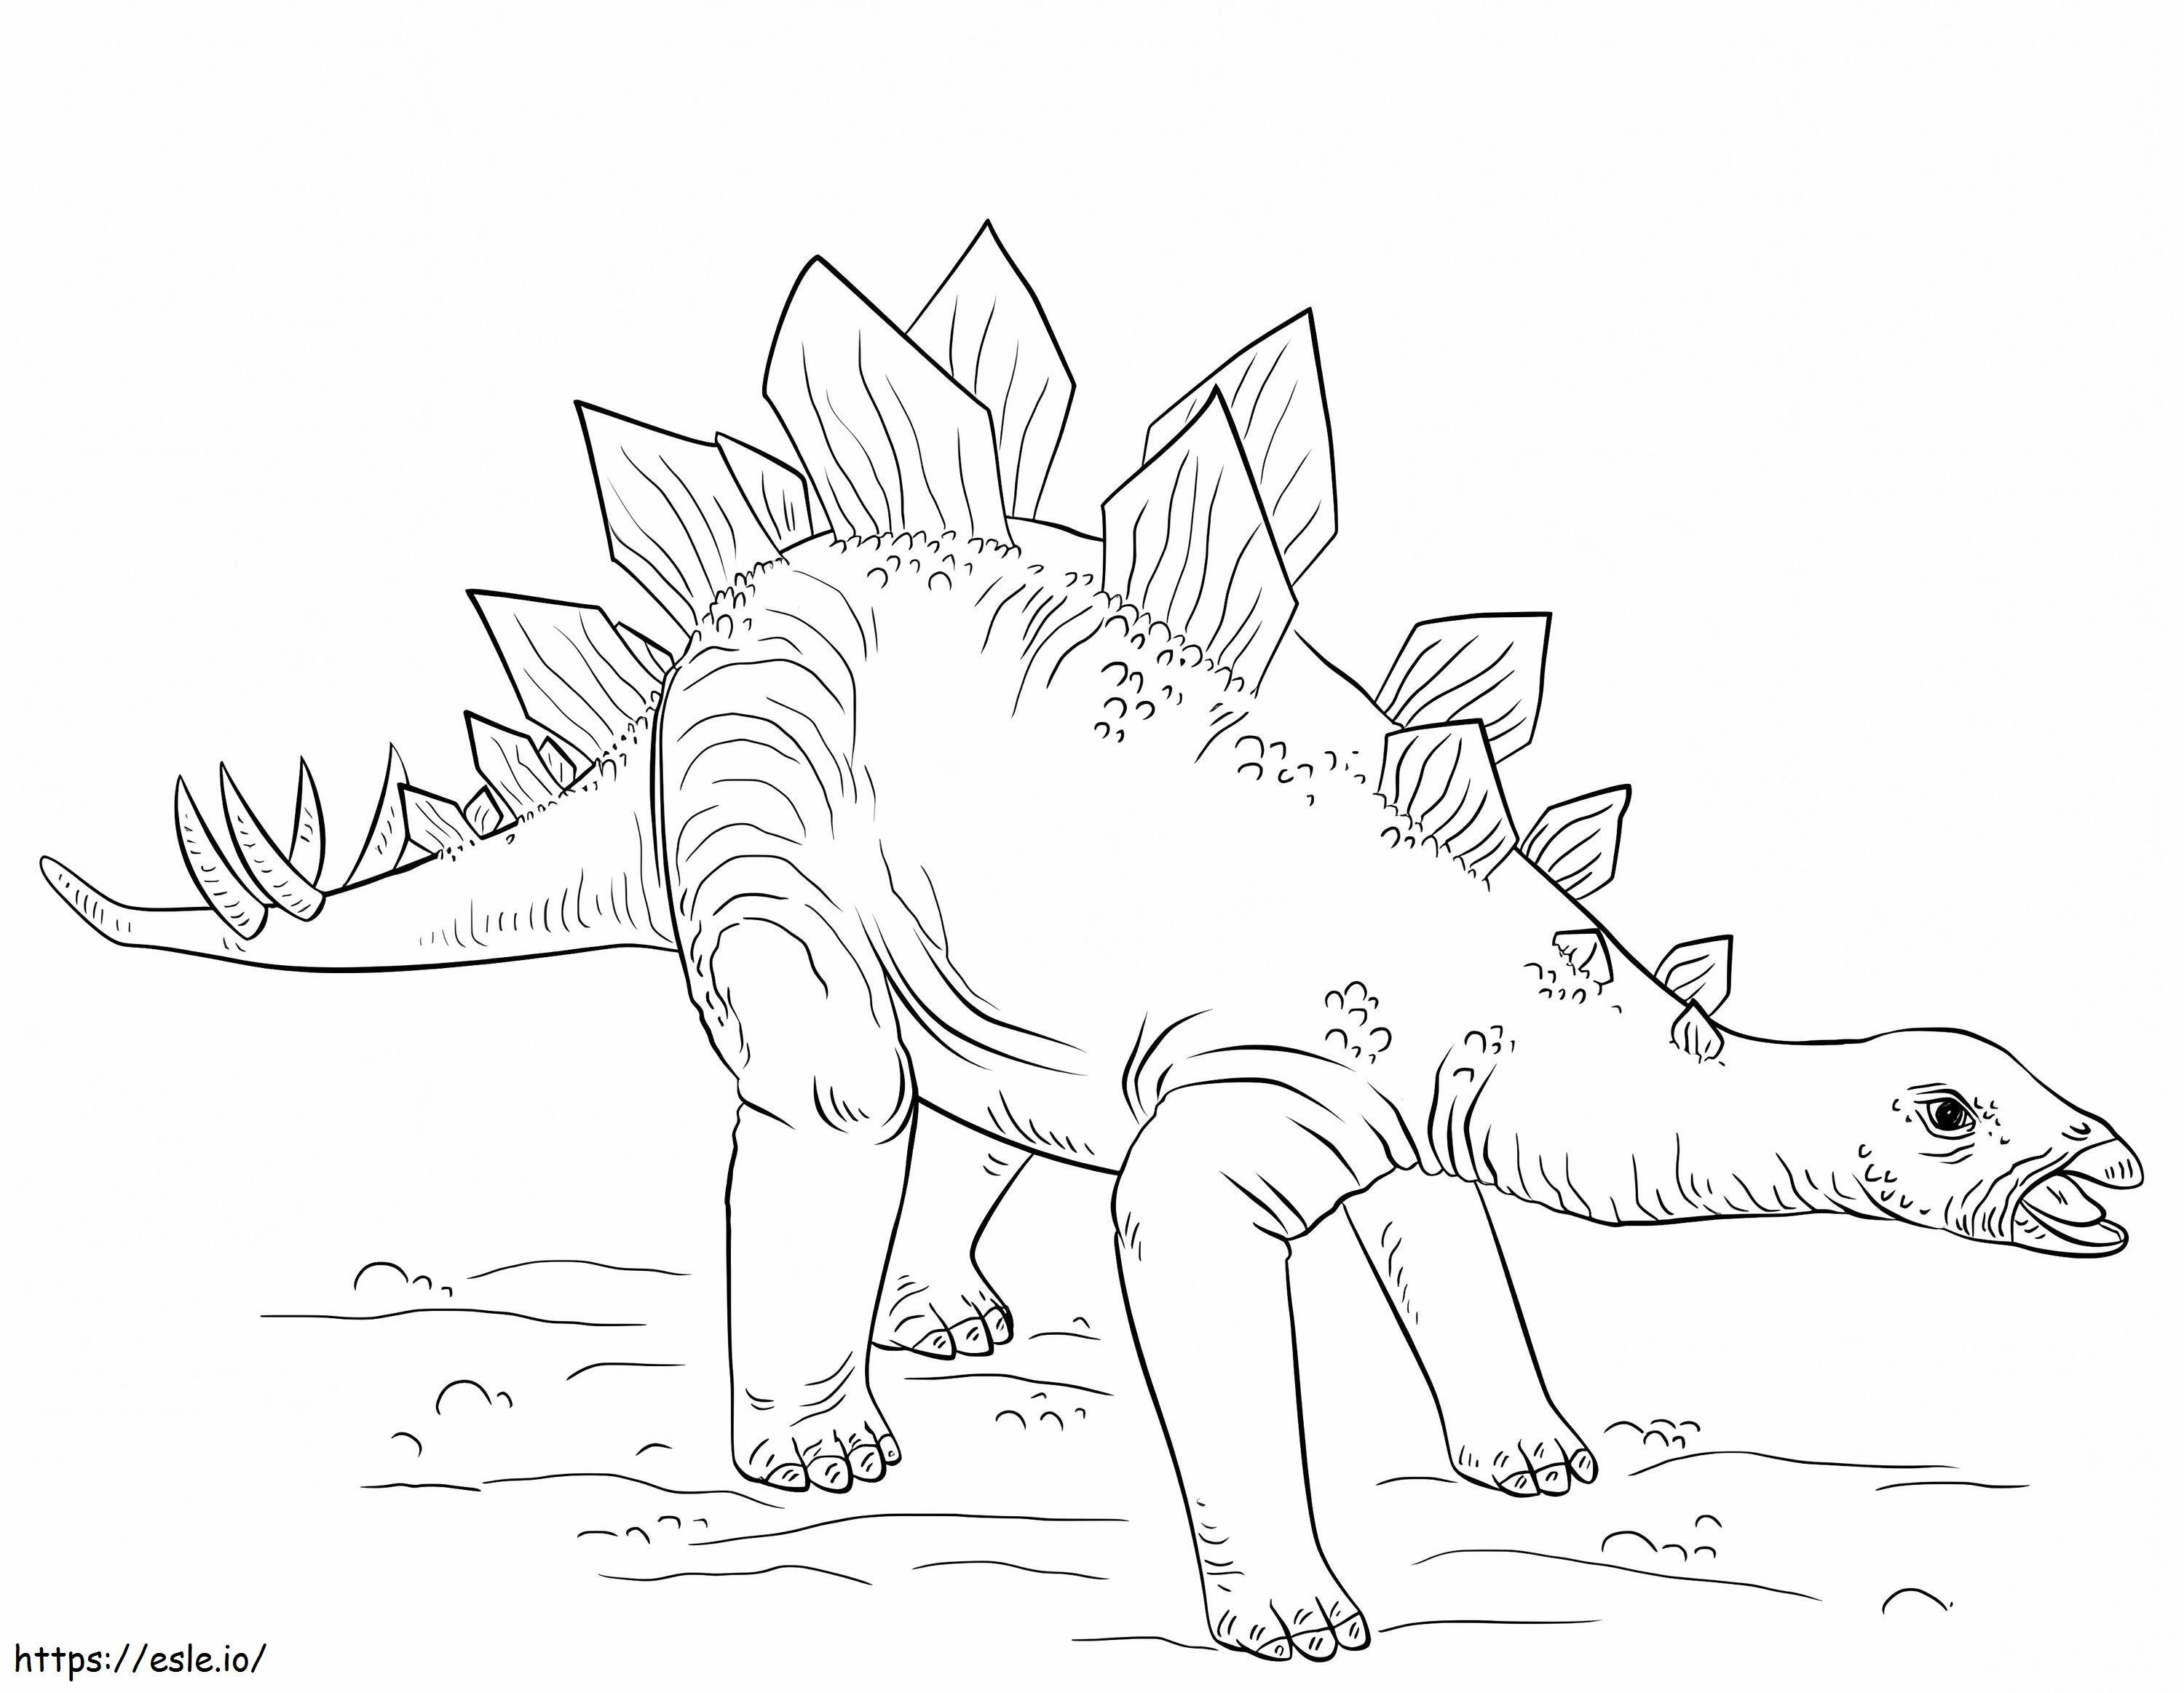 Genç Stegosaurus boyama